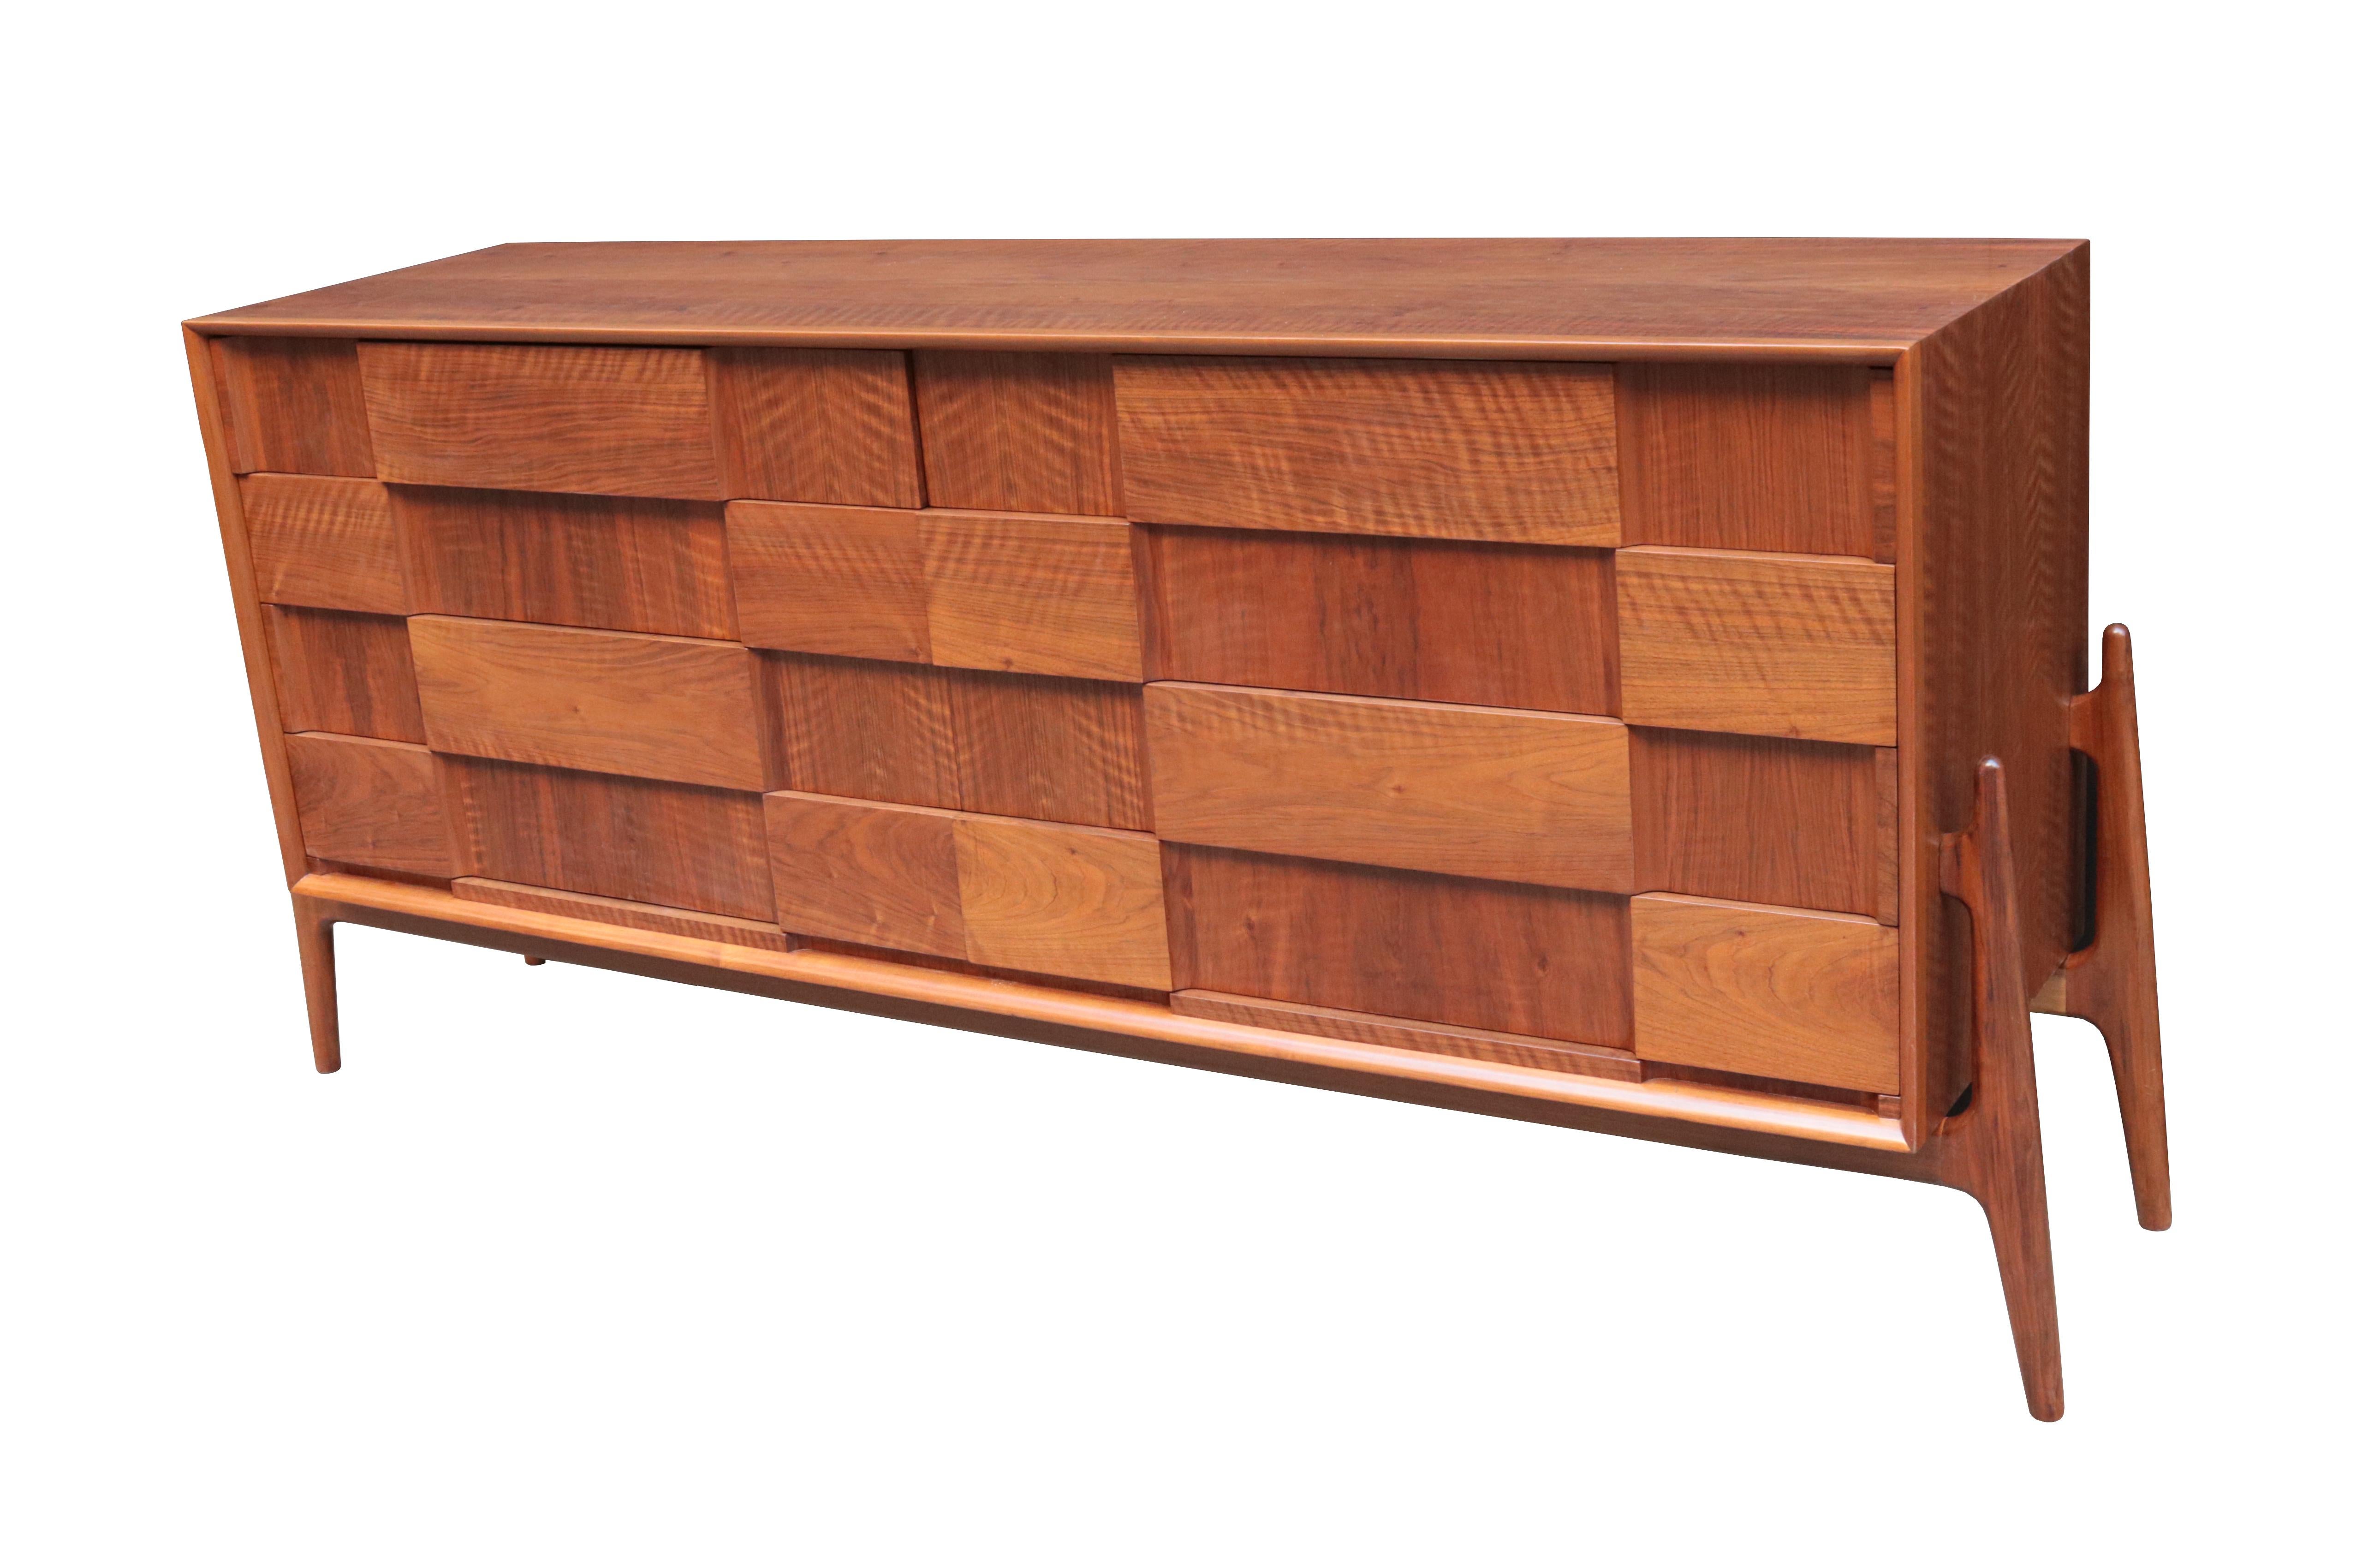 A Danish modern long chest of drawers in teak.
Designed by Jorrgen Clausen for Brande Mobelfabrik.